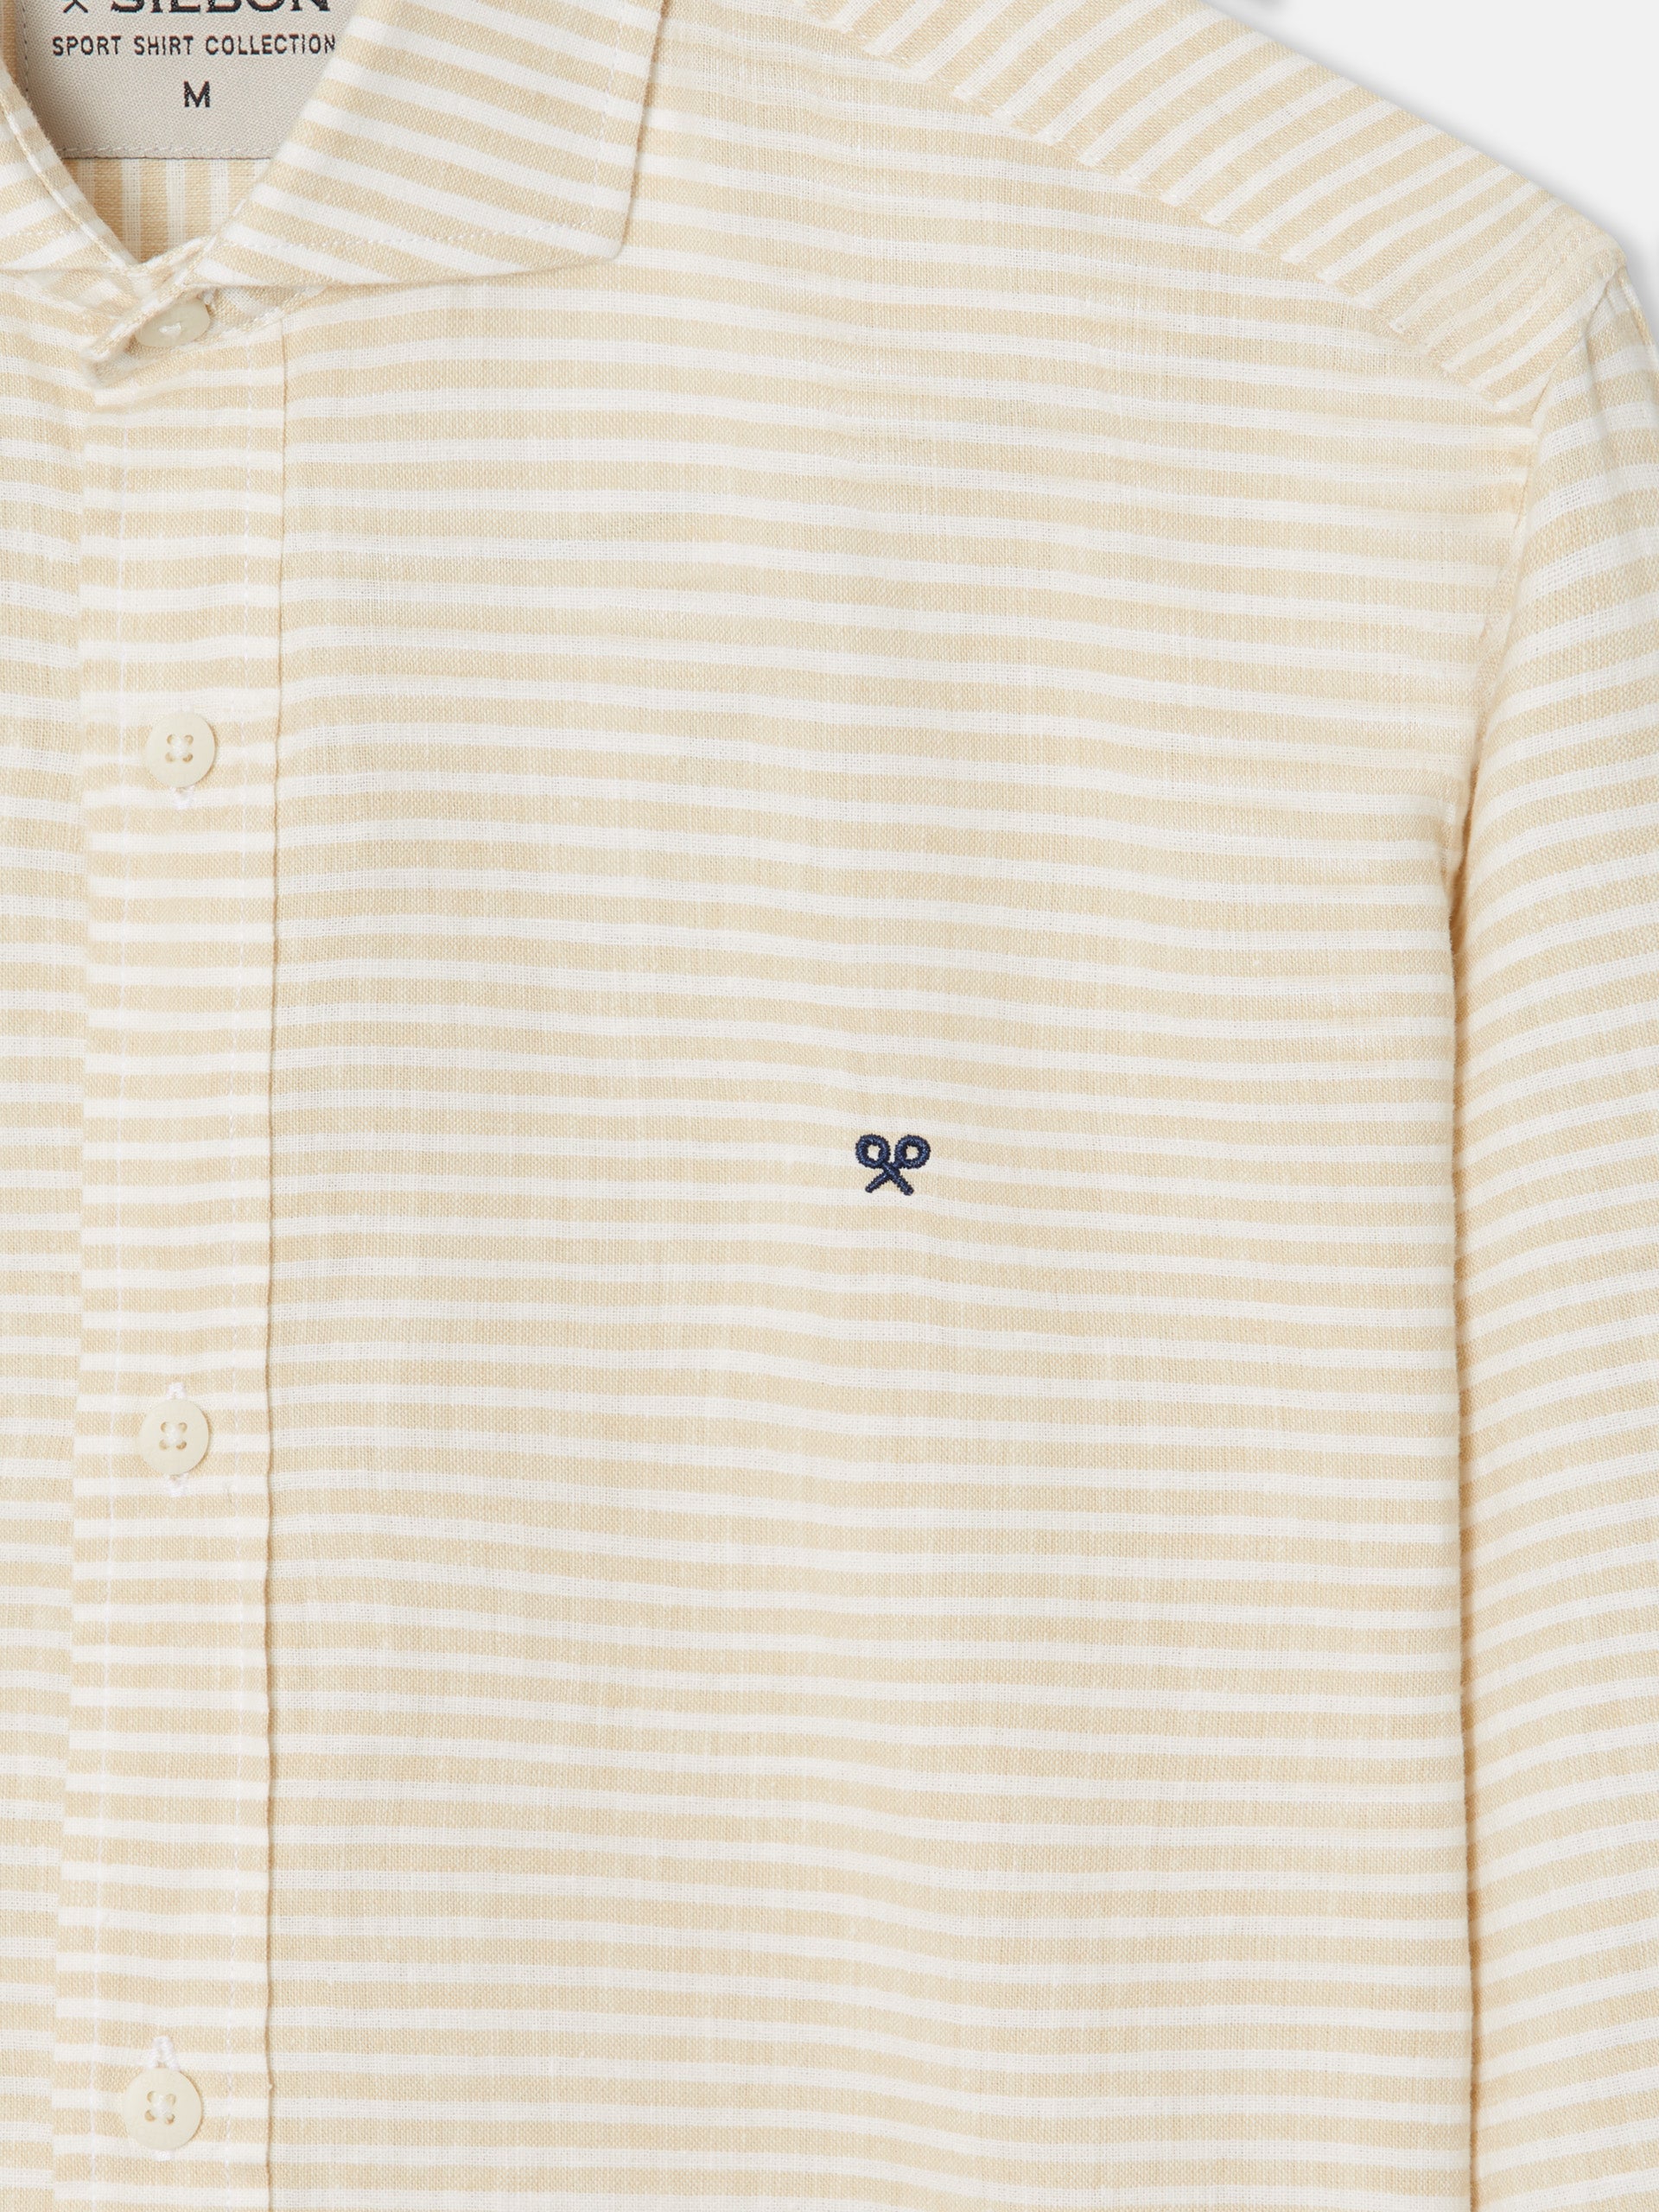 Silbon soft sport shirt beige horizontal stripe